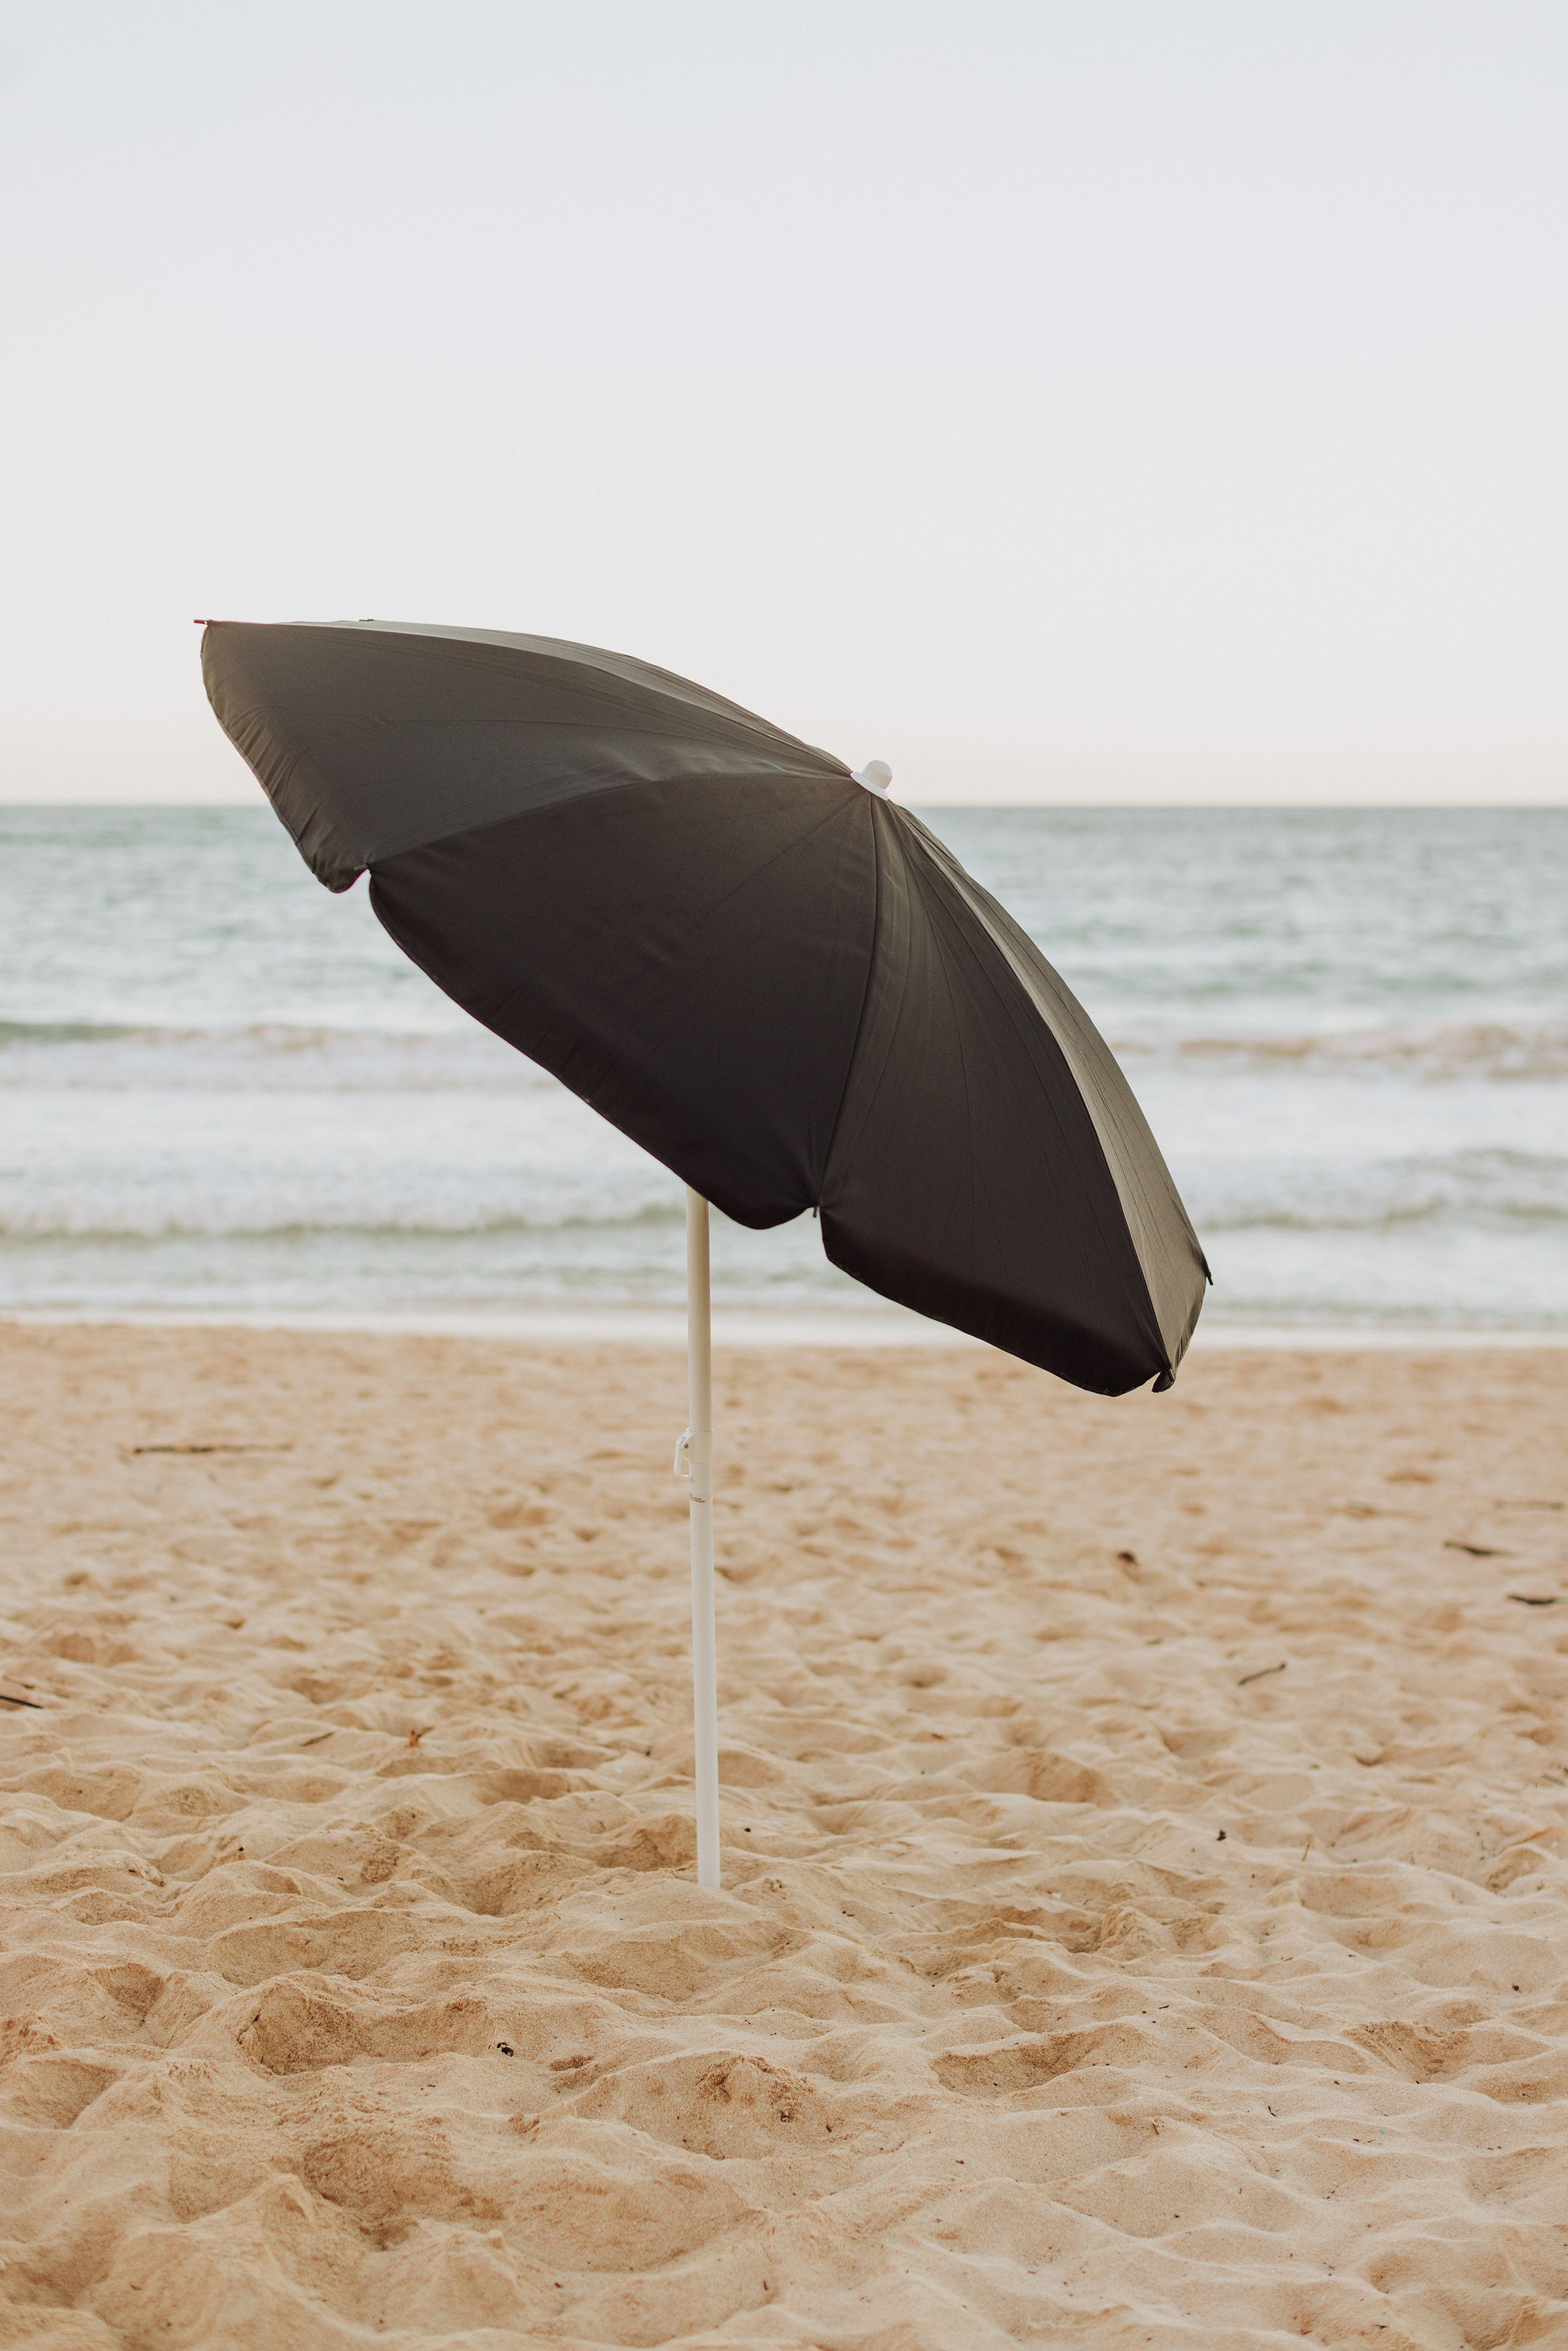 South Carolina Gamecocks - 5.5 Ft. Portable Beach Umbrella